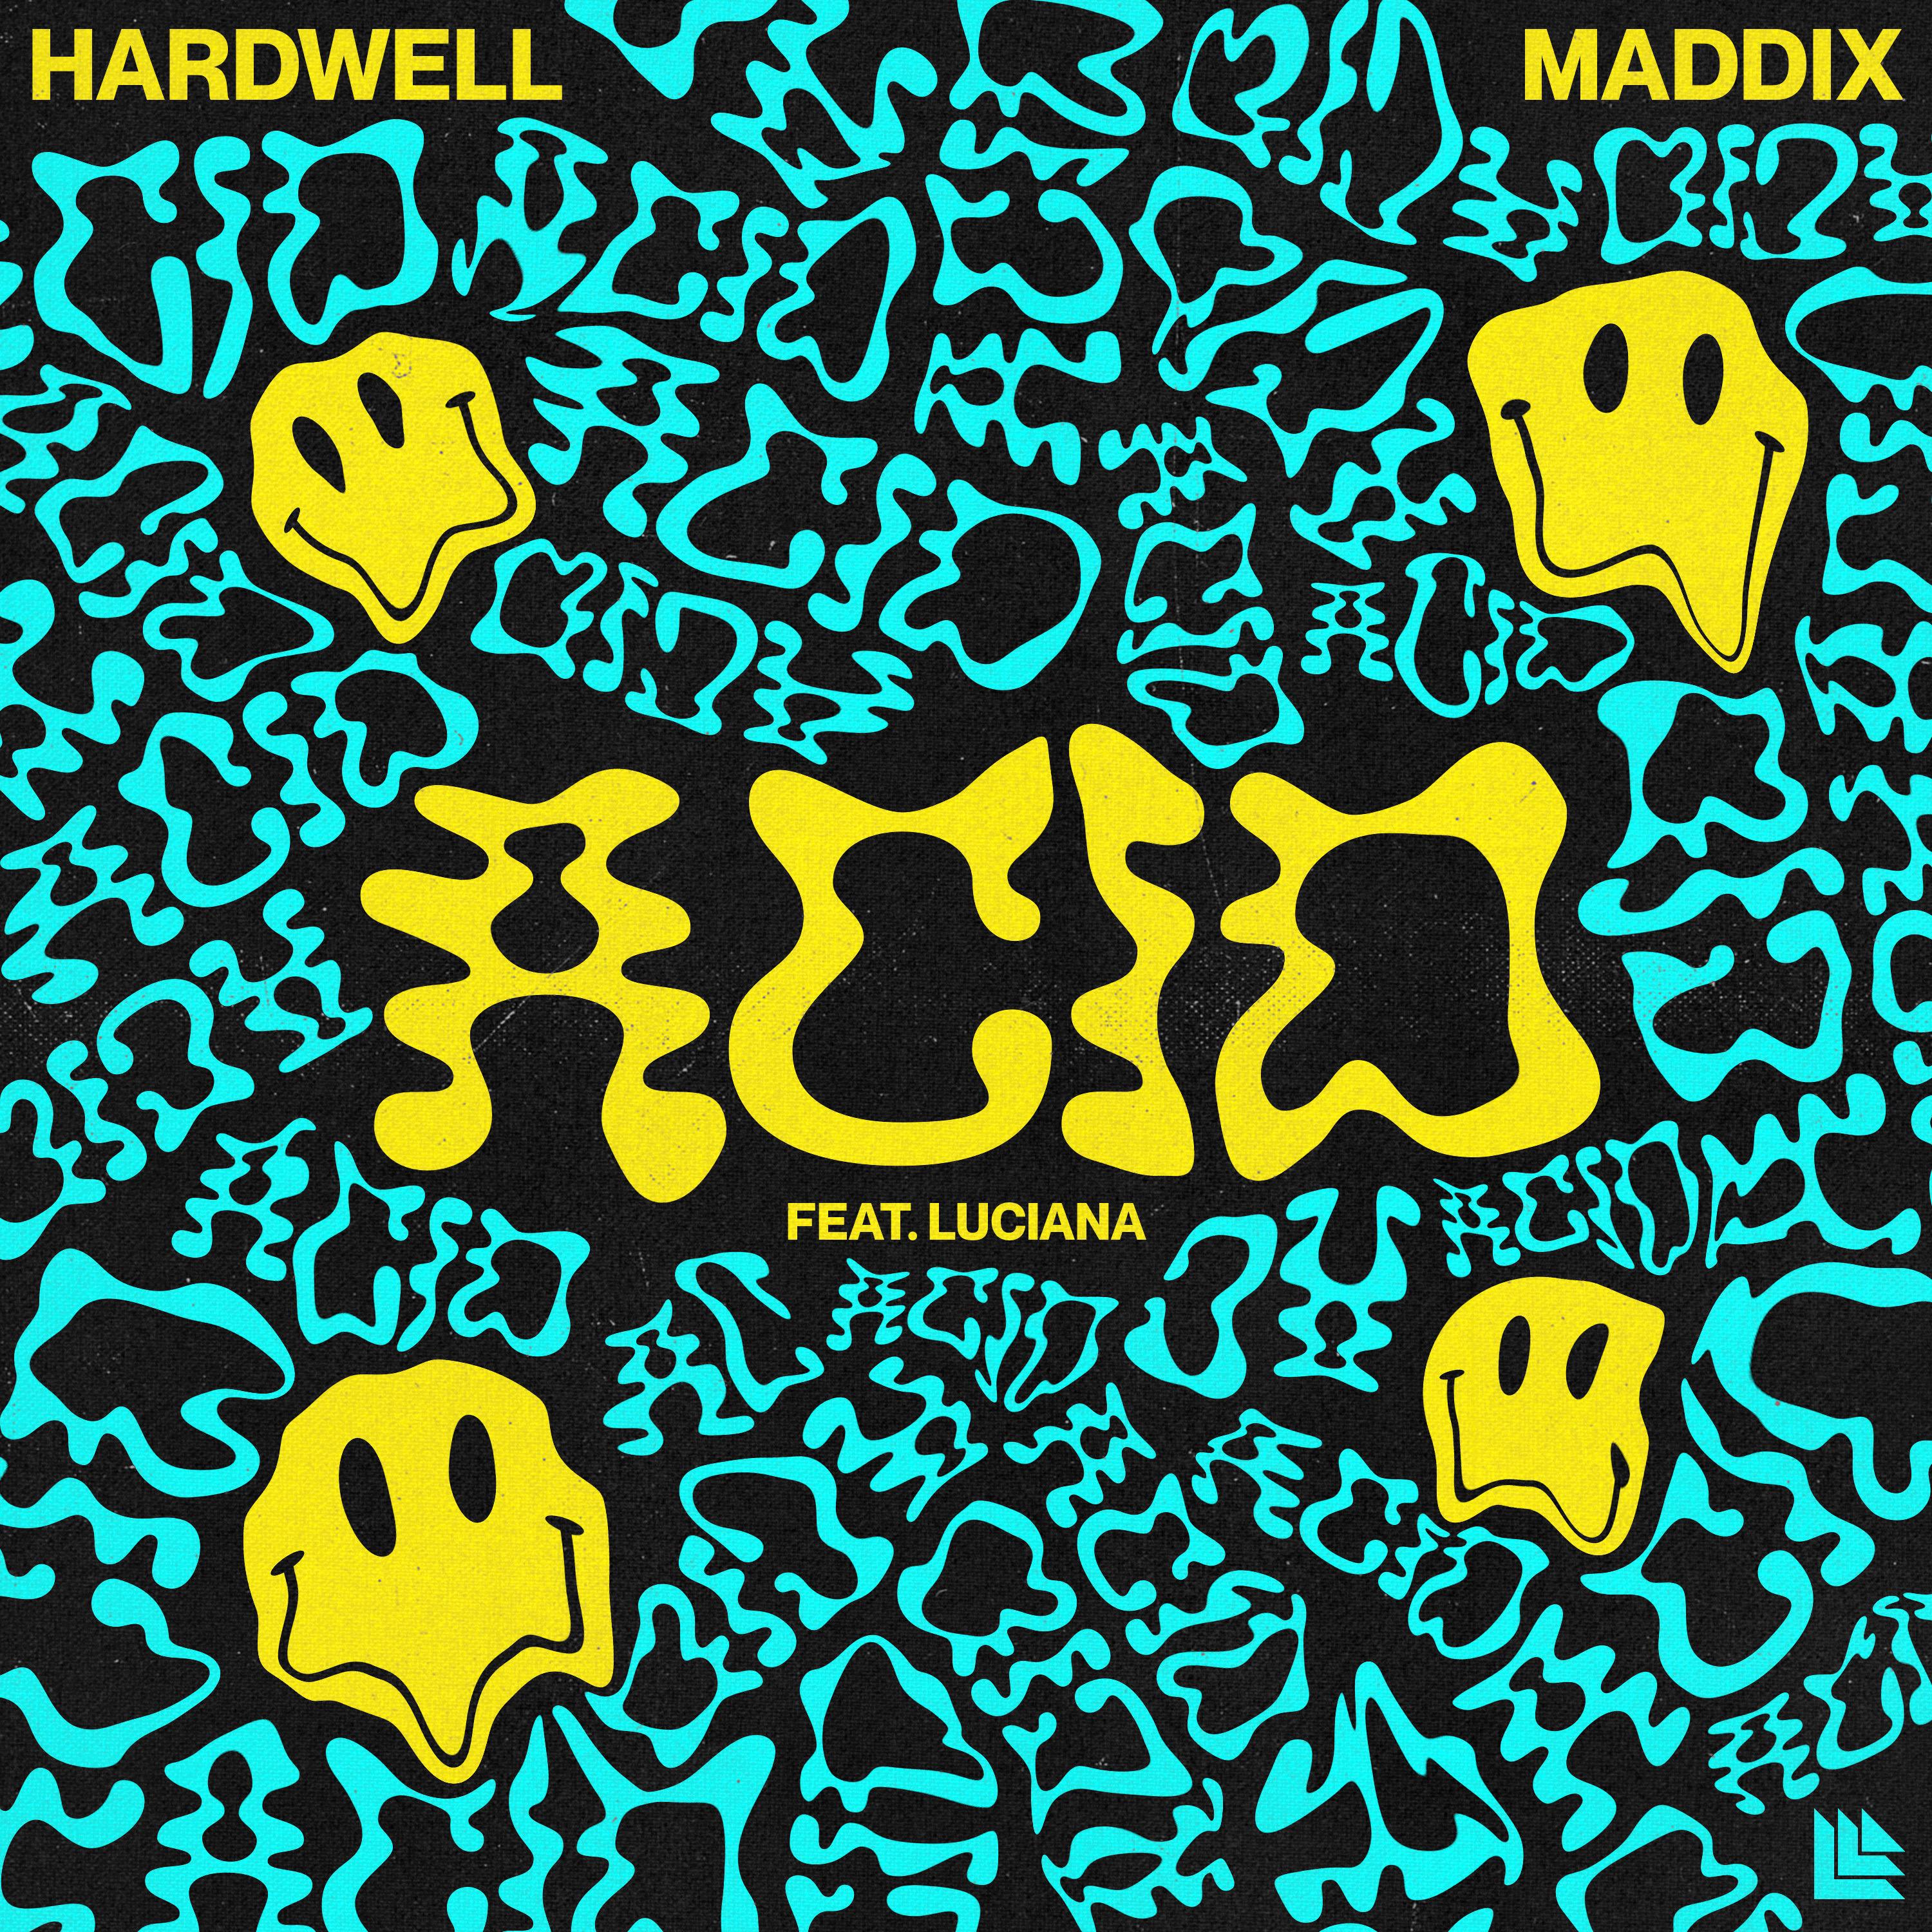 Hardwell - ACID (Extended Mix)